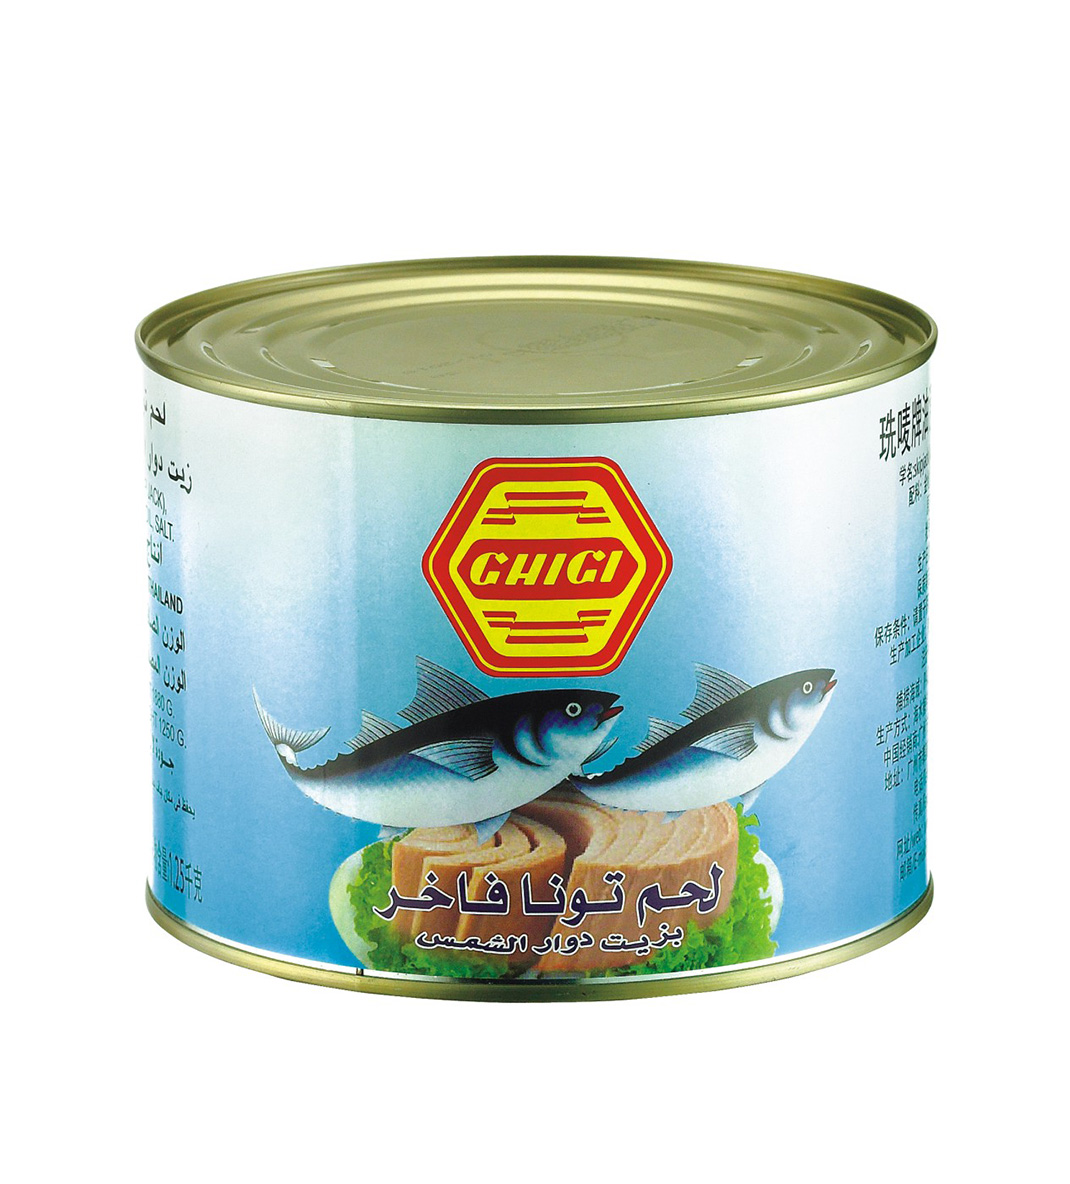 GHIGI Light Tuna Chunk in Vegetable Oil